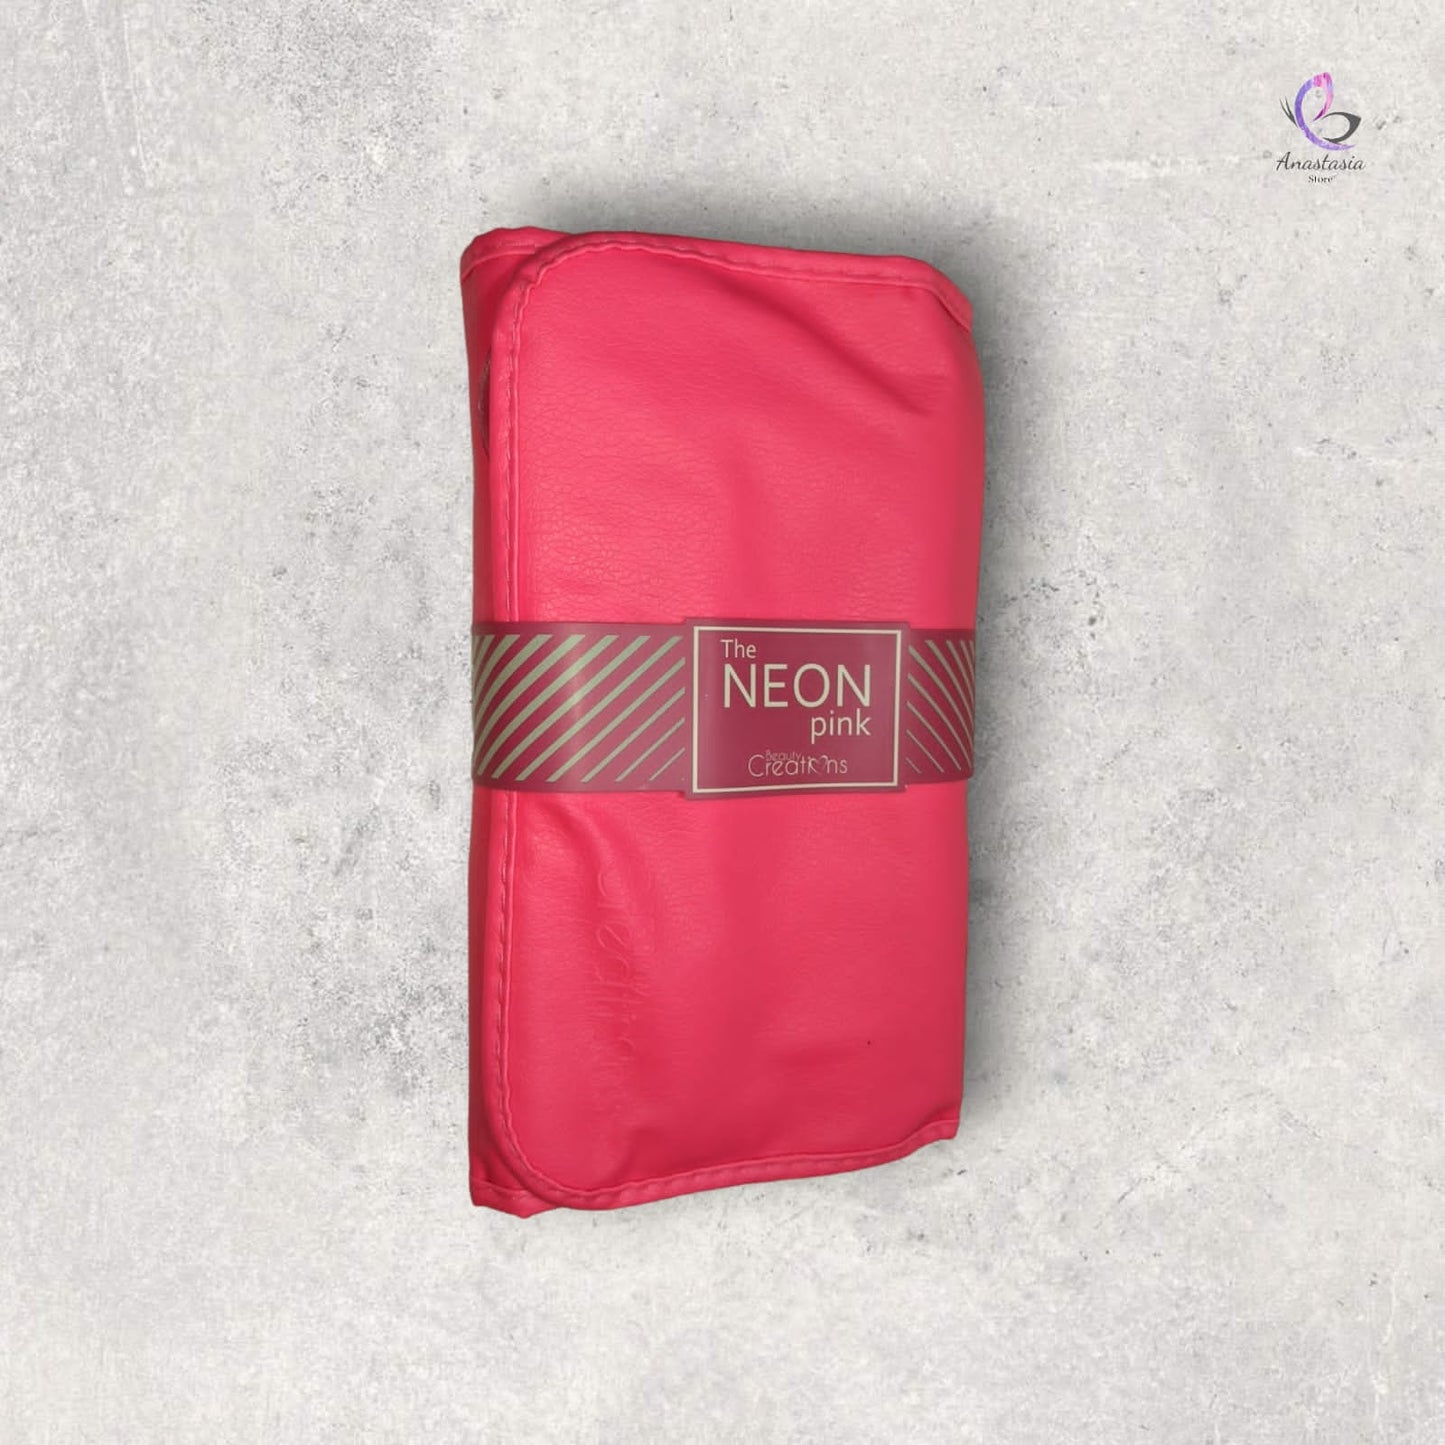 Set de brochas Neon Pink de Beauty Creacions